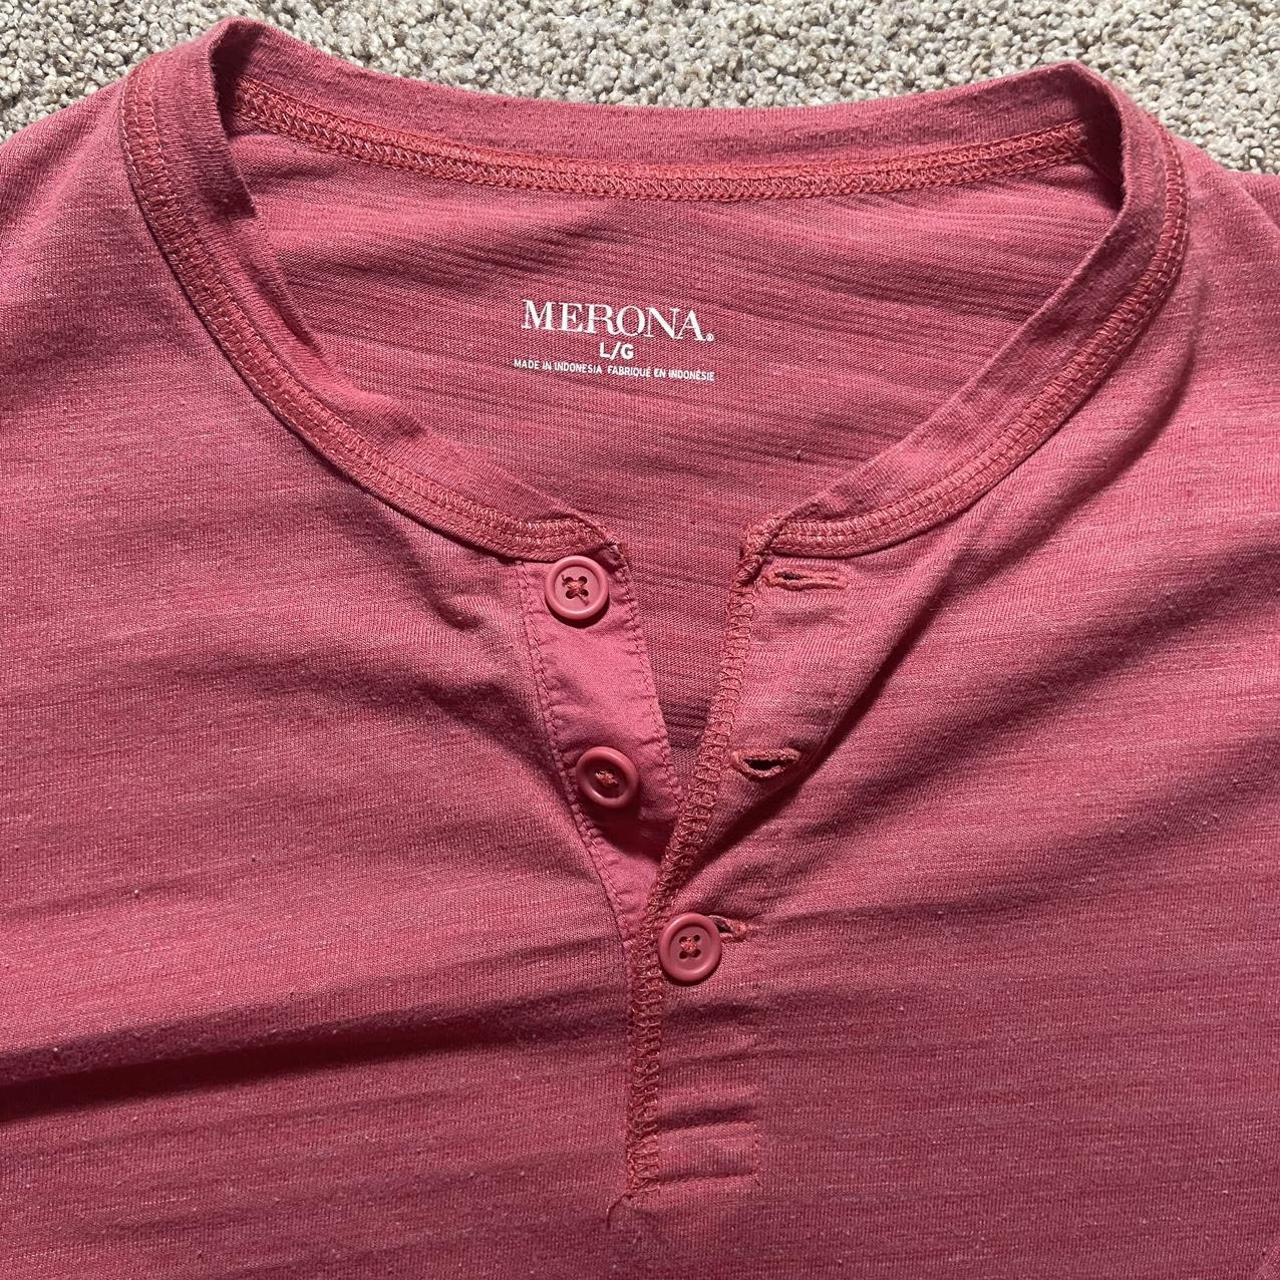 Merona Men's Burgundy and Red Shirt | Depop